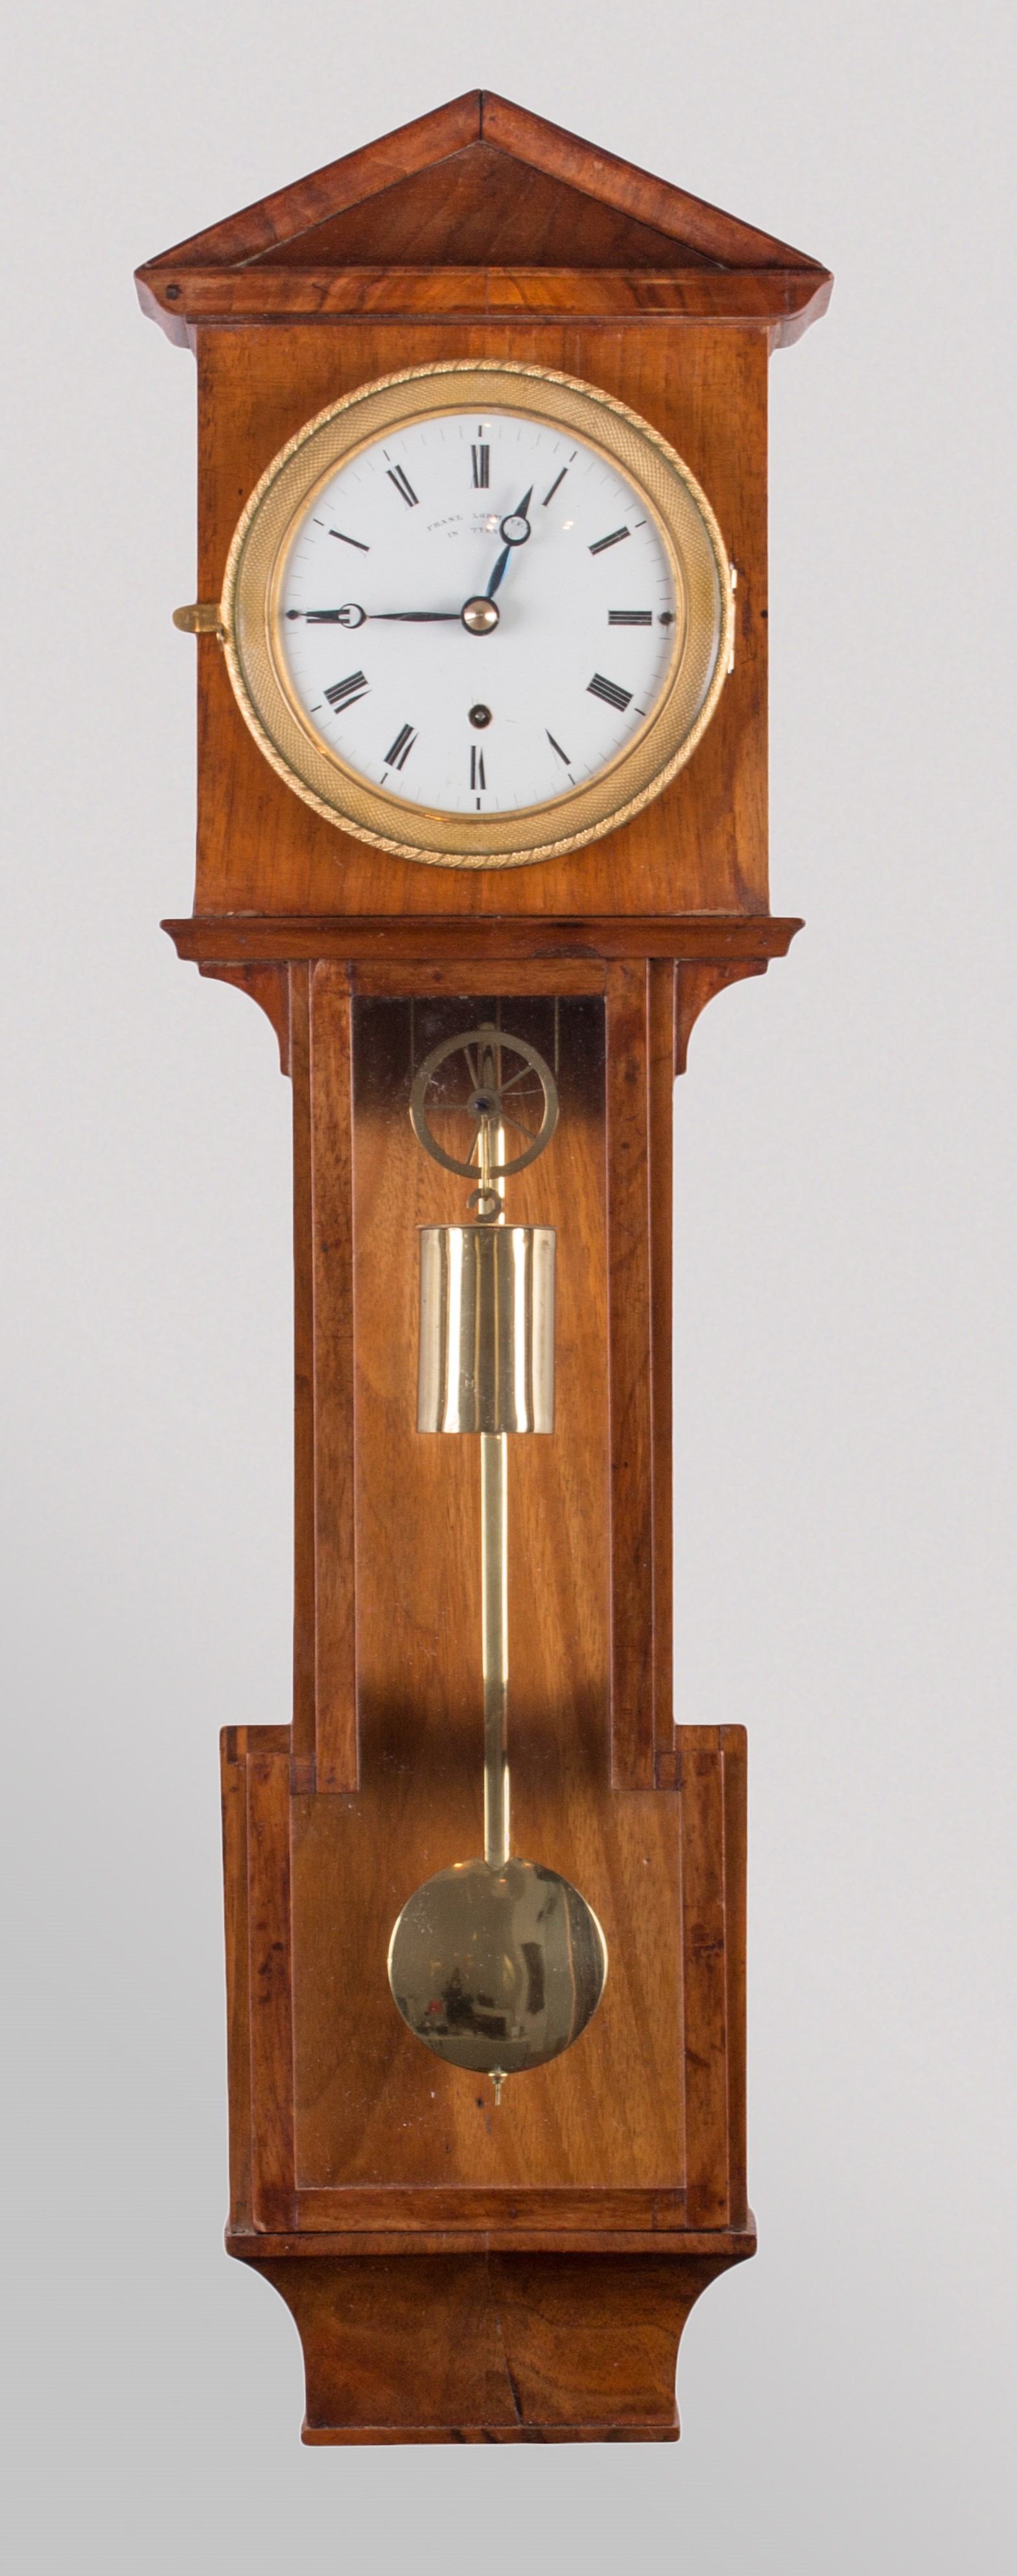 Small Laterndl clock by Franz Lobmayer with 10 days duration, c. 1830.